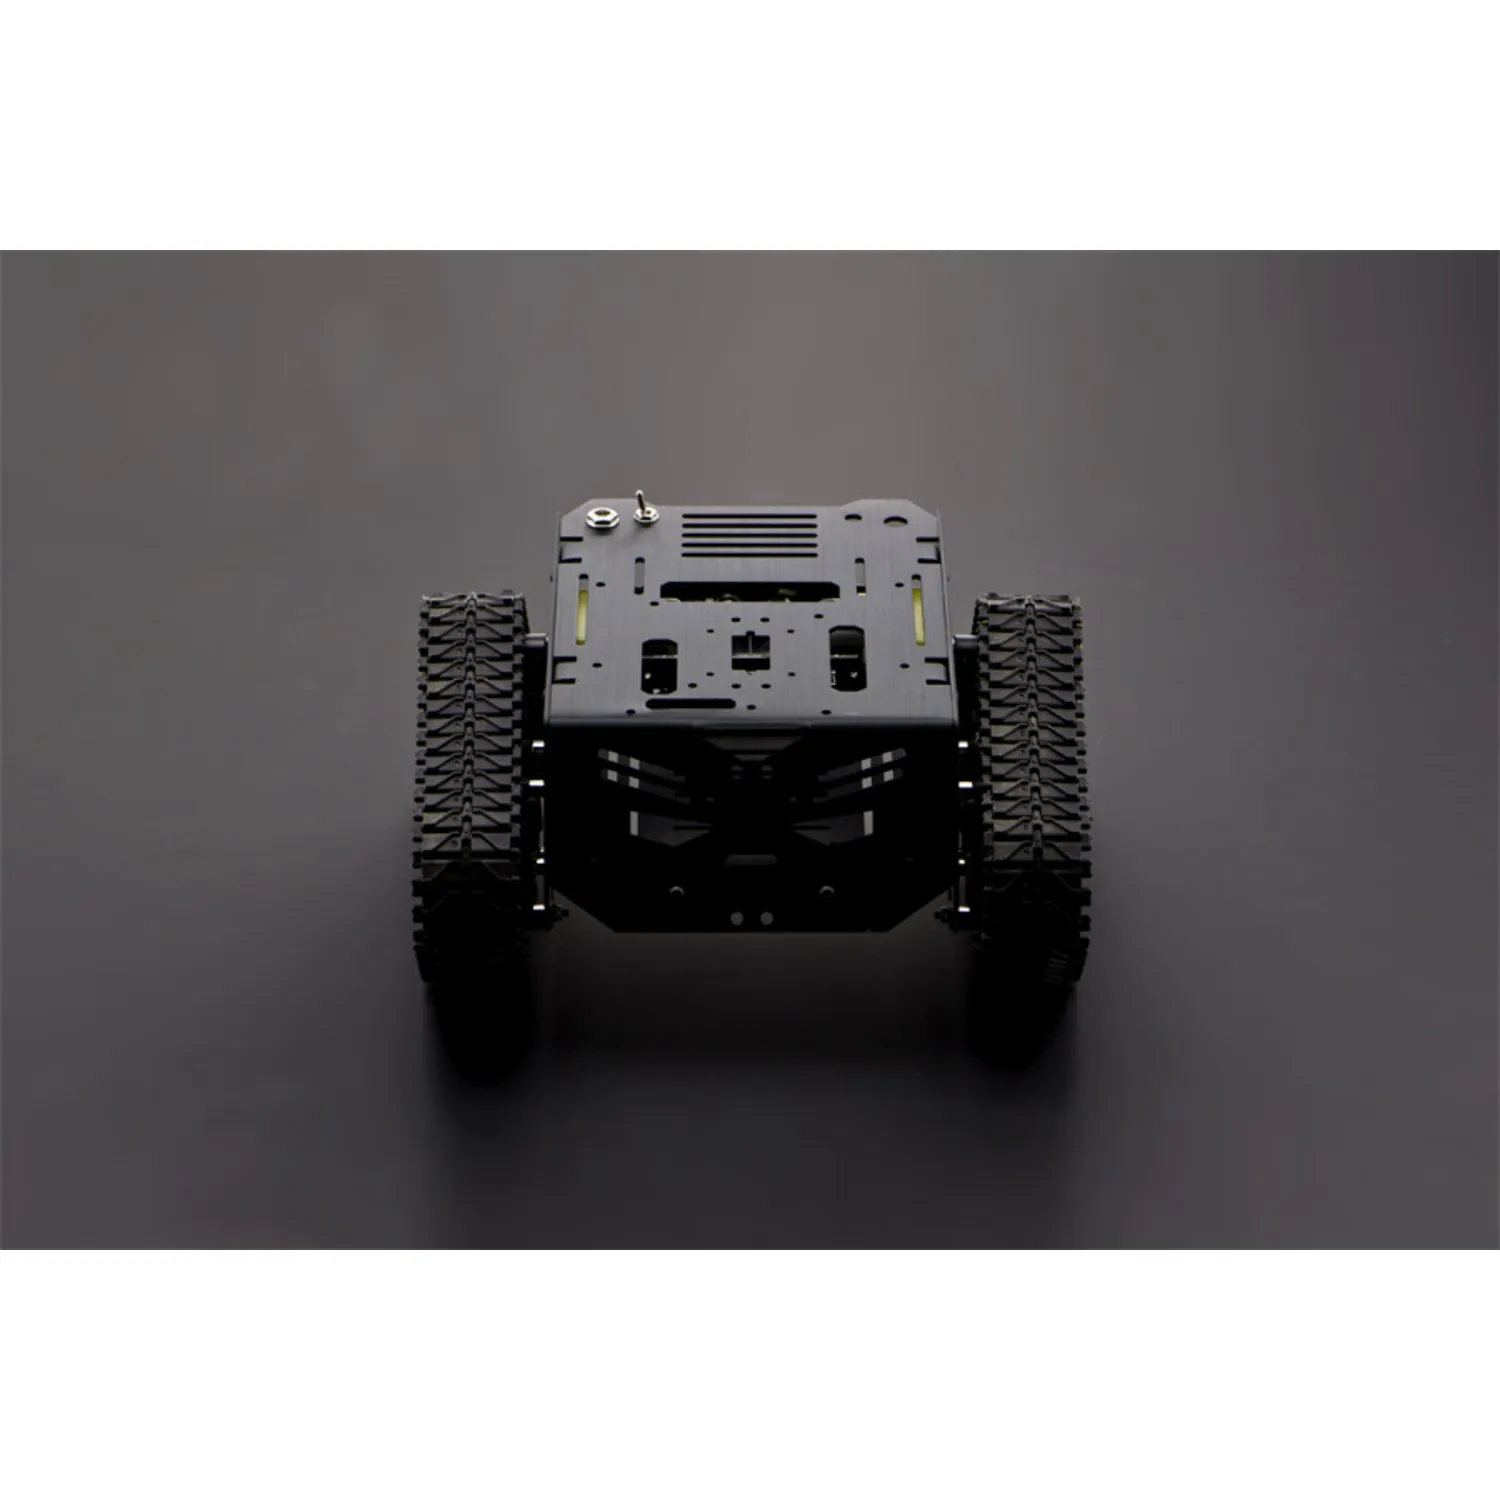 Photo of Devastator Tank Mobile Robot Platform